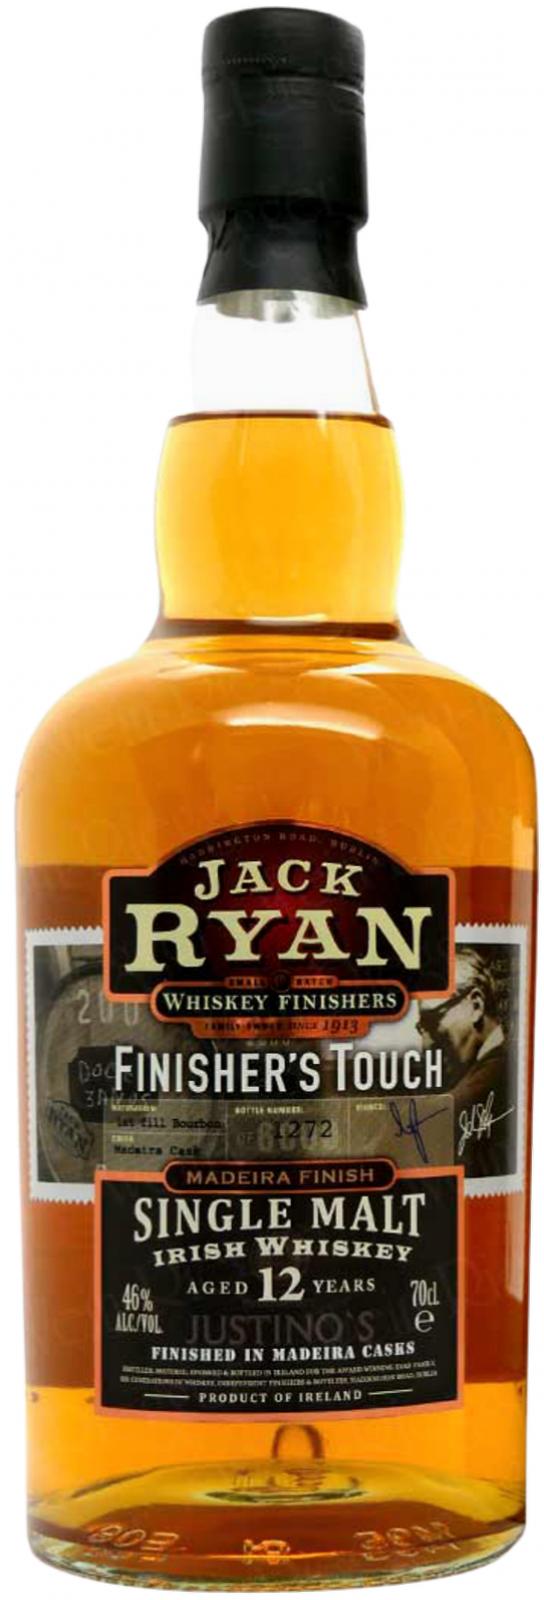 Jack Ryan Finisher's Touch 12 year Old Irish Single Malt Finished in Madeira Cask Whiskey